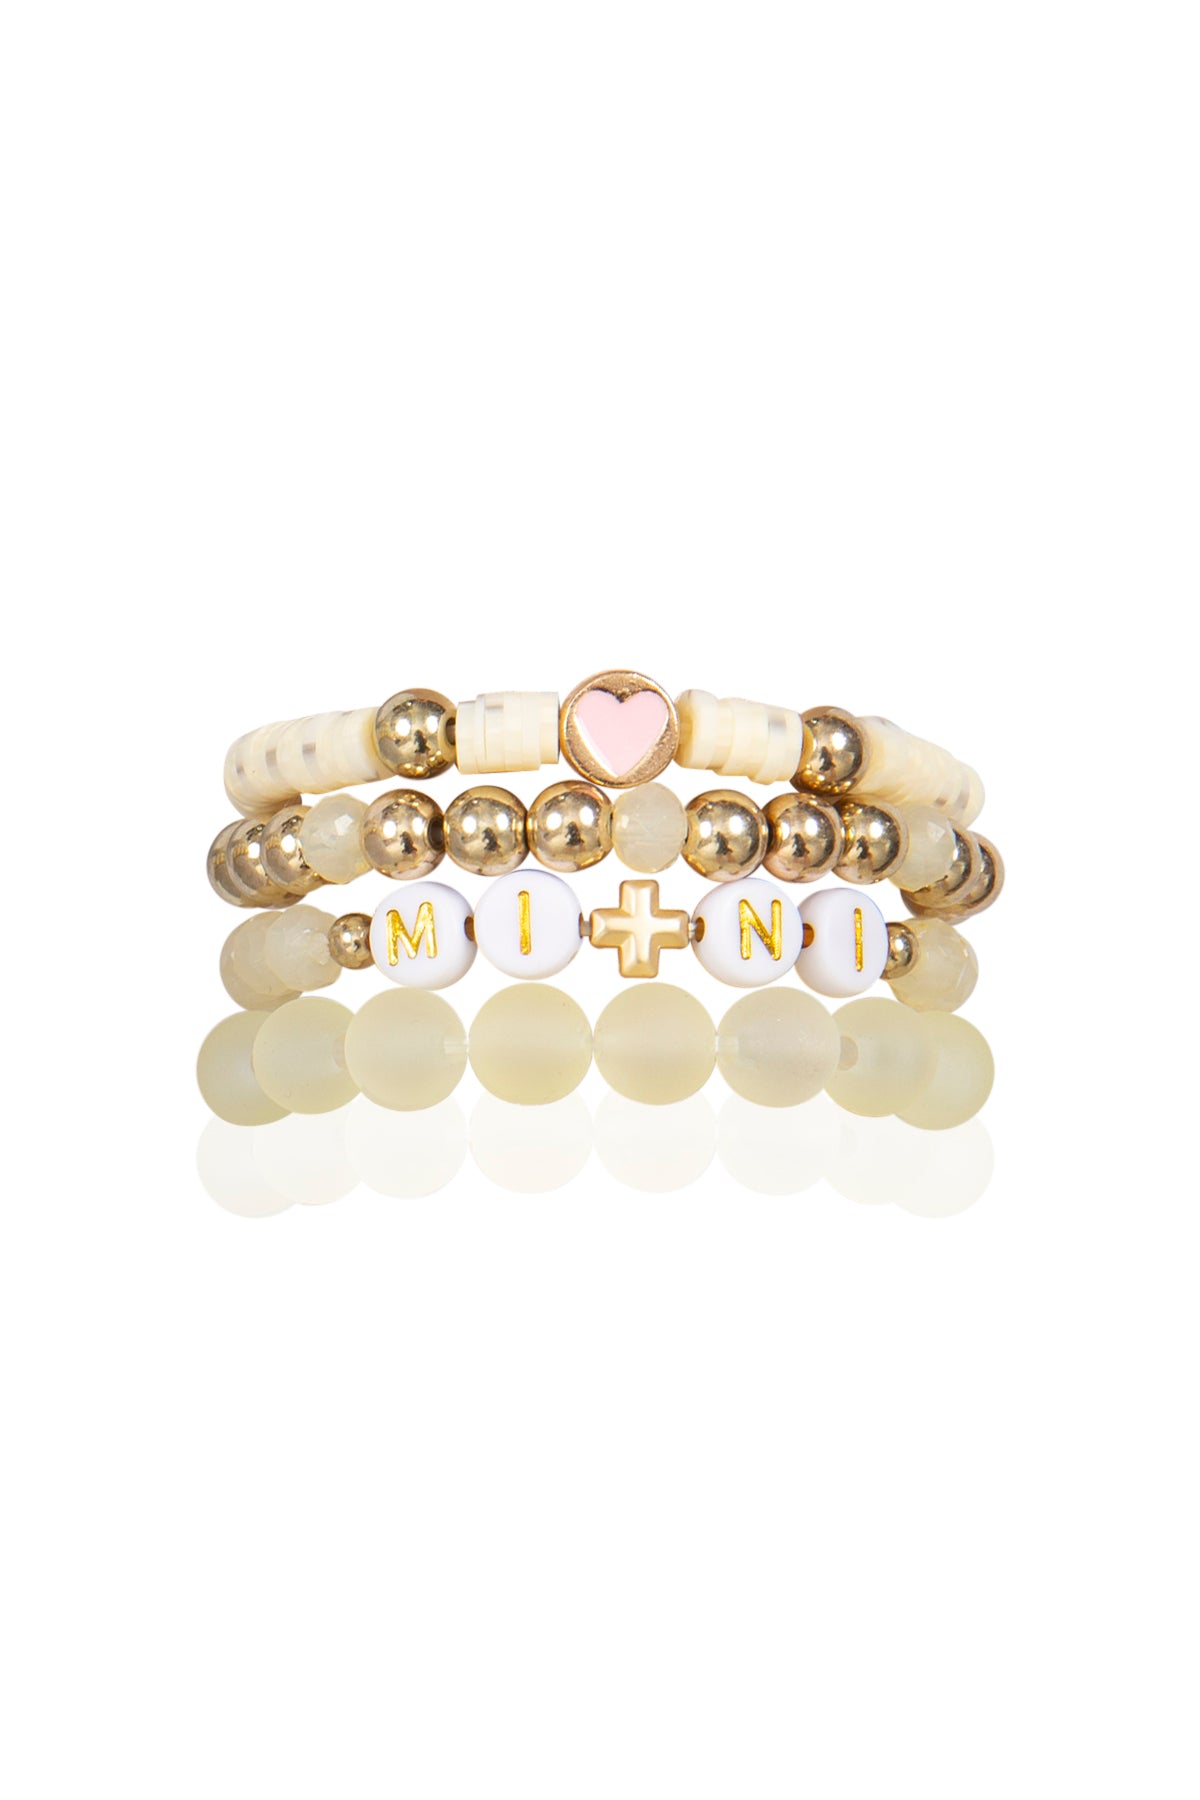 Lucky Charms Crystal Beaded Bracelet Bangle Handmade Women Adjustable Party  Gift | eBay